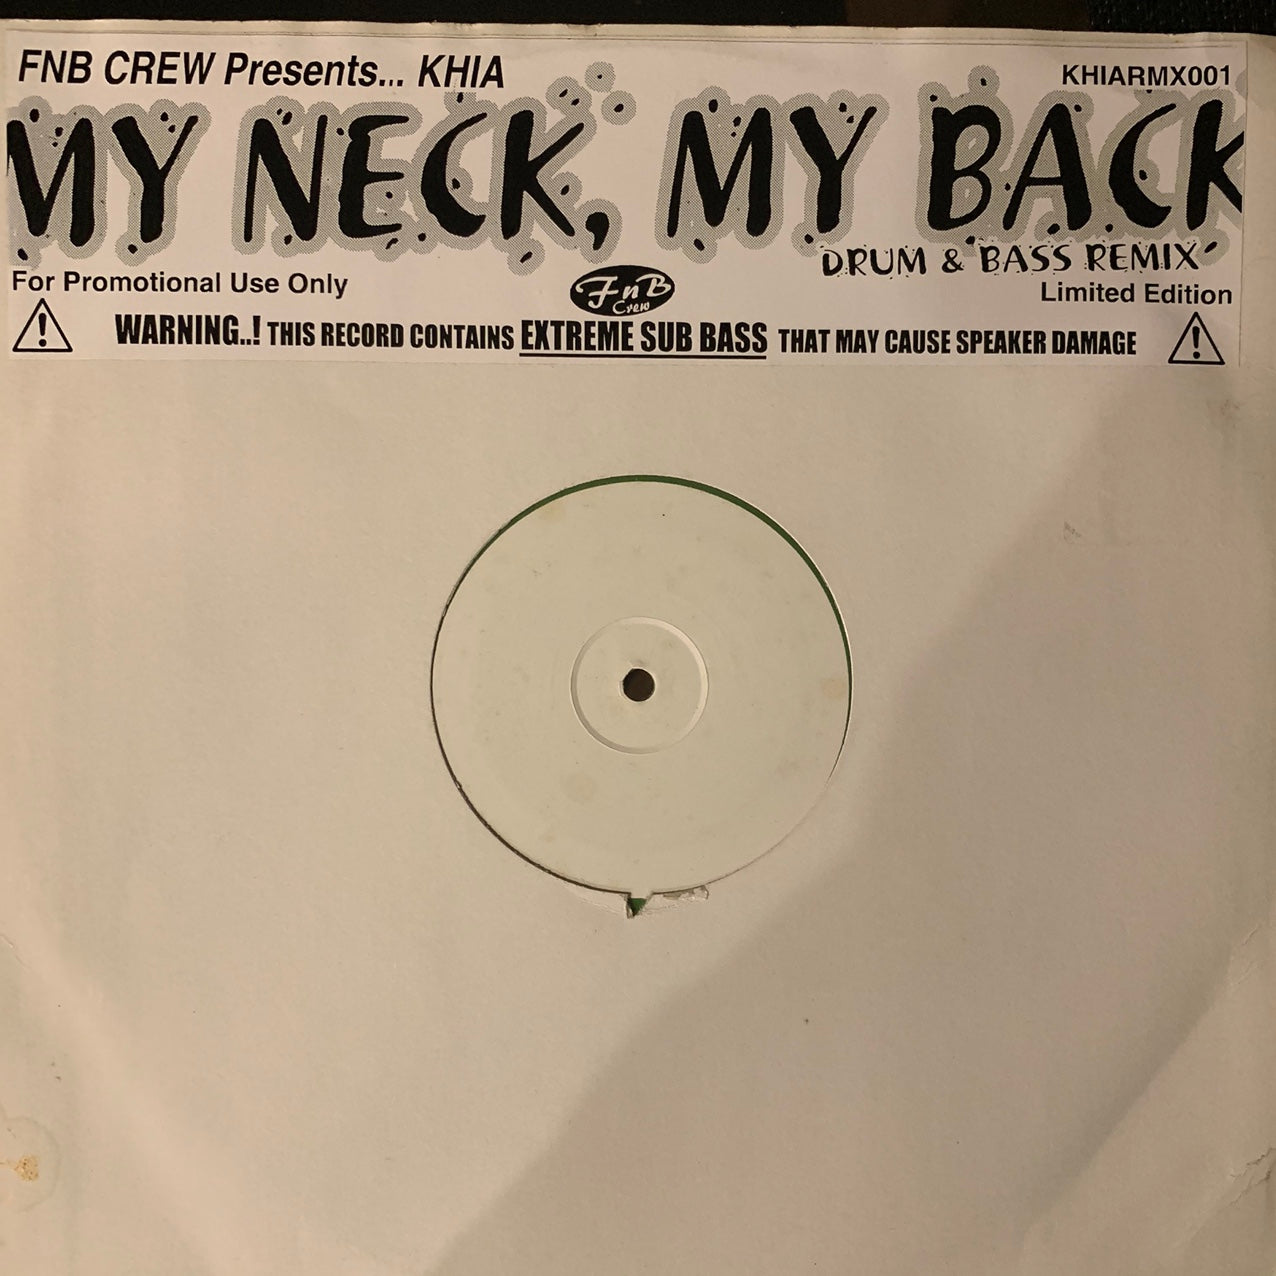 FNB Crew Presents Khia “My Neck’ My Back” The Drum & Bass Remixes 2 Track 12inch Vinyl